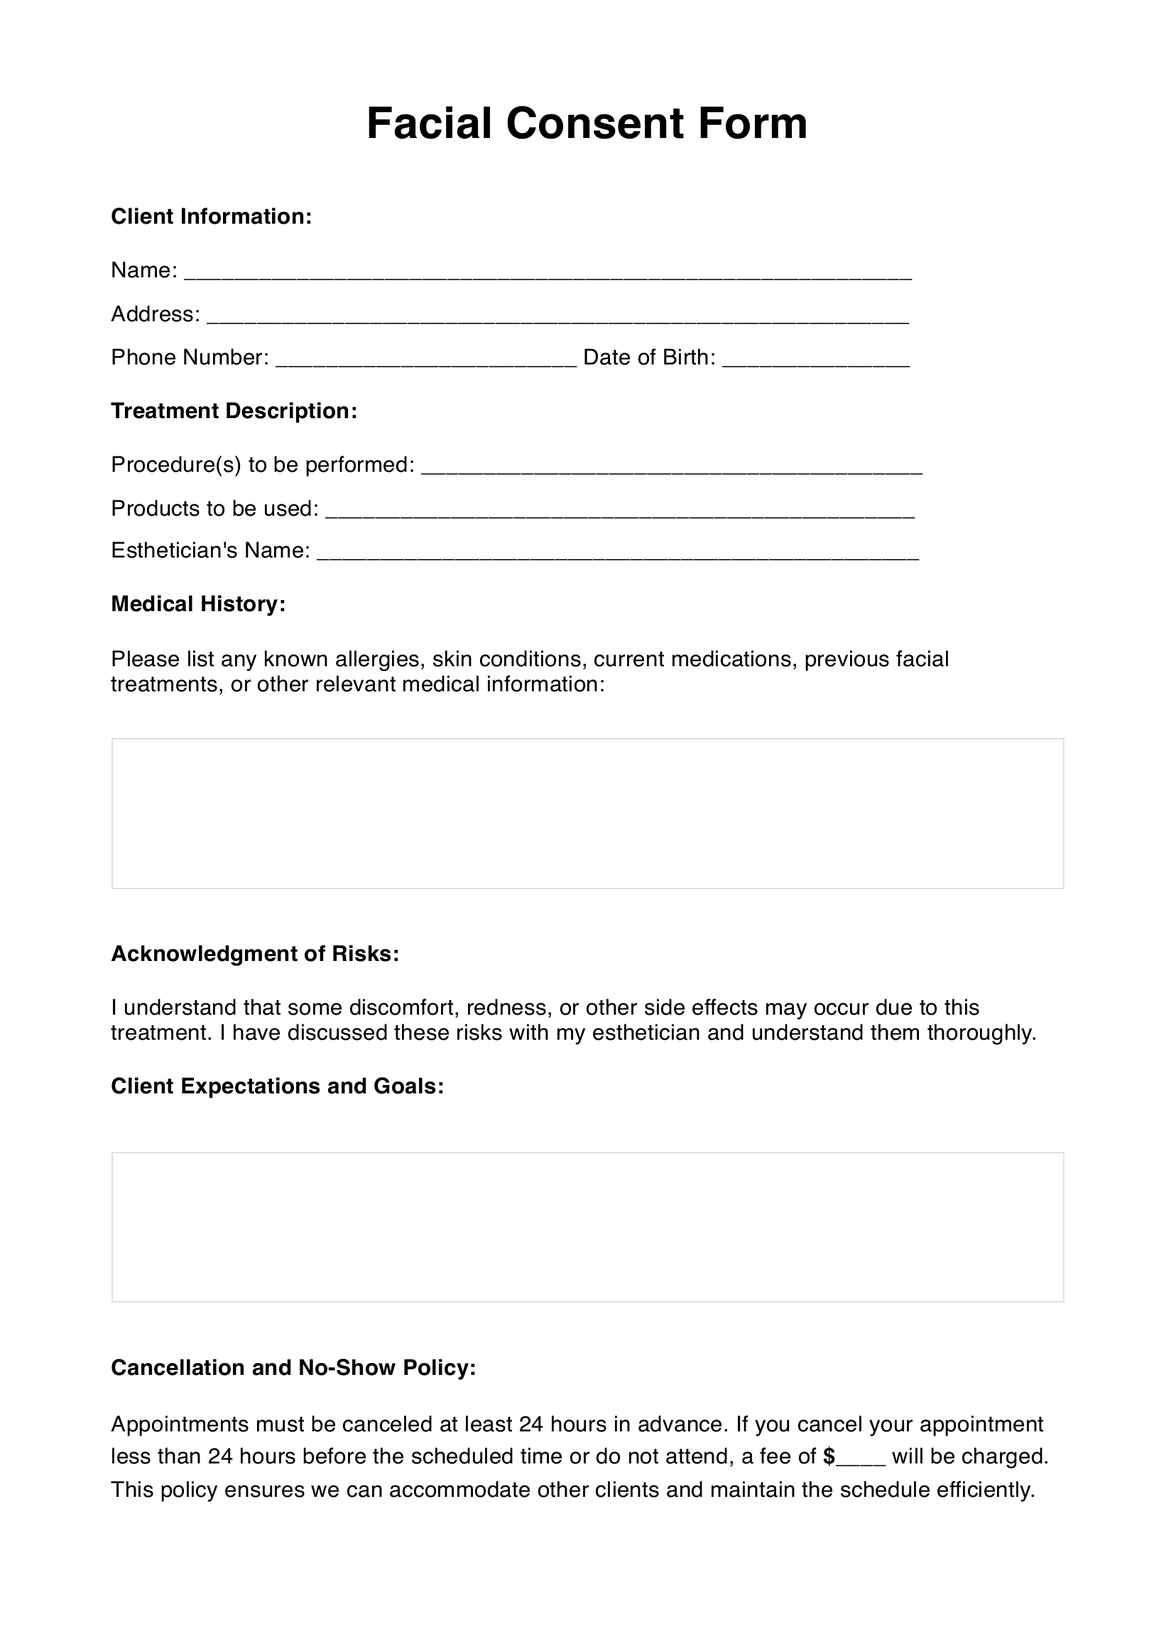 Facial Consent Forms PDF Example